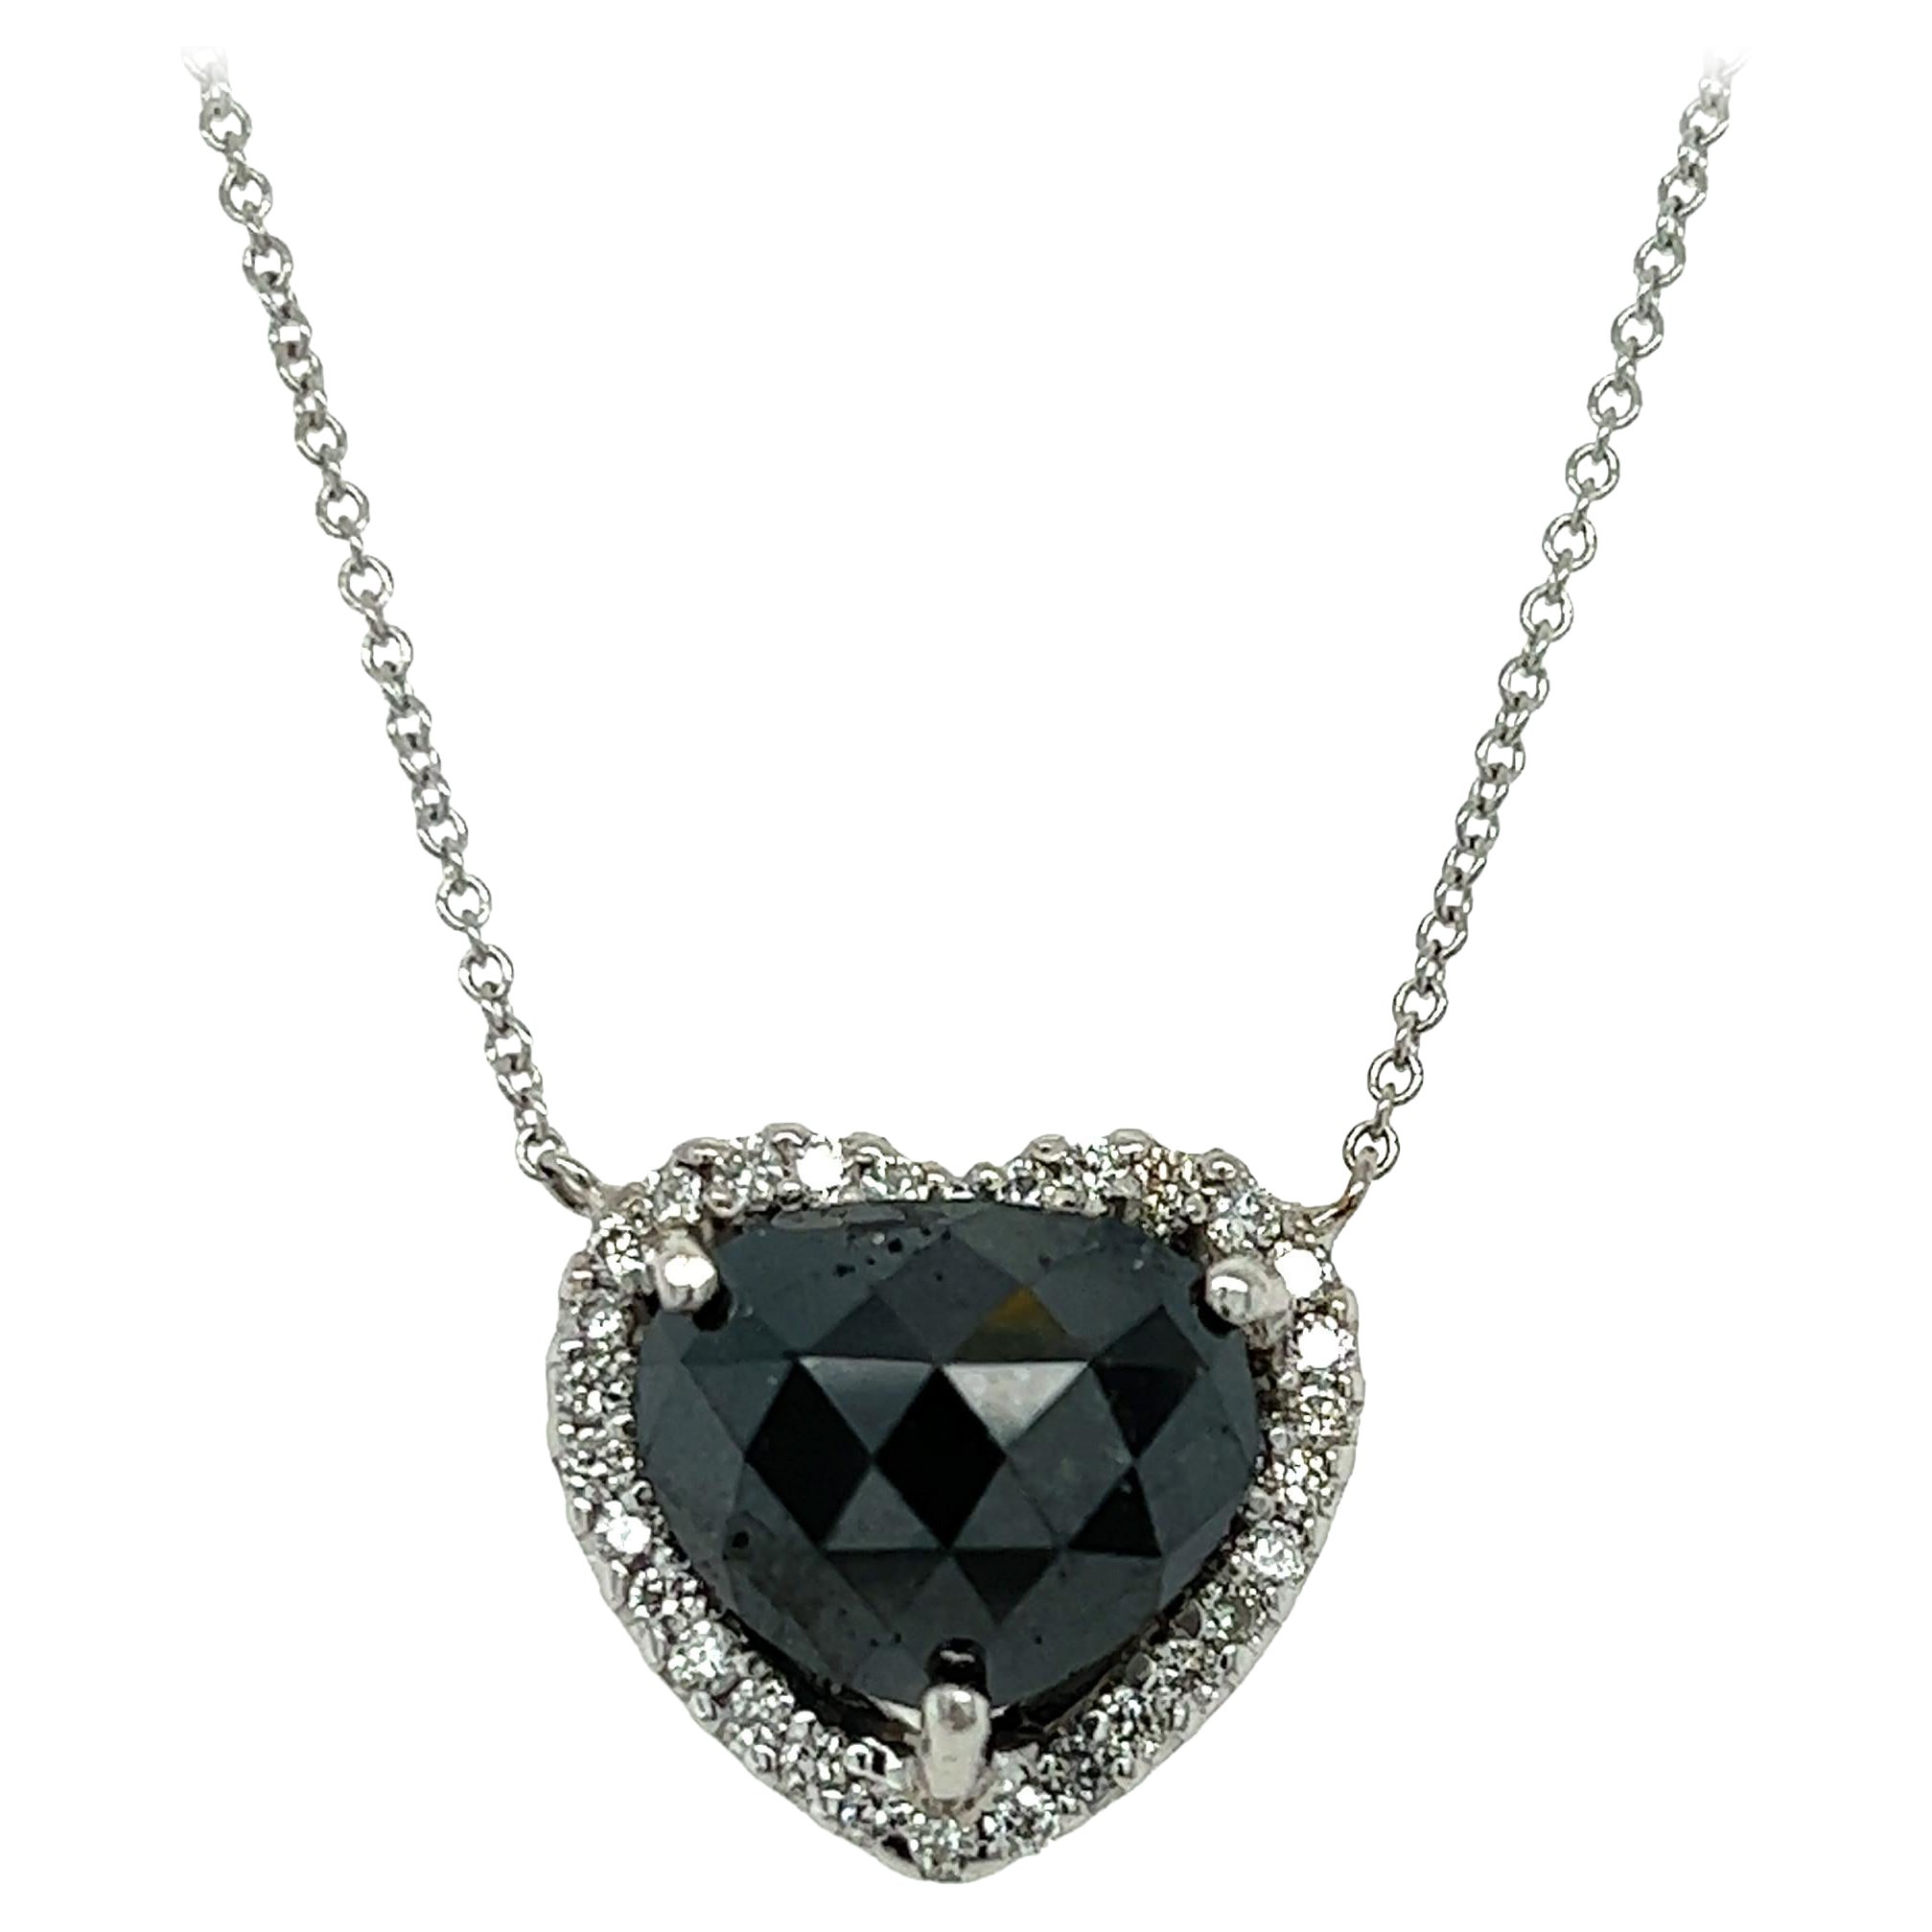 5.11 Carat Black Diamond White Diamond White Gold Chain Necklace For Sale